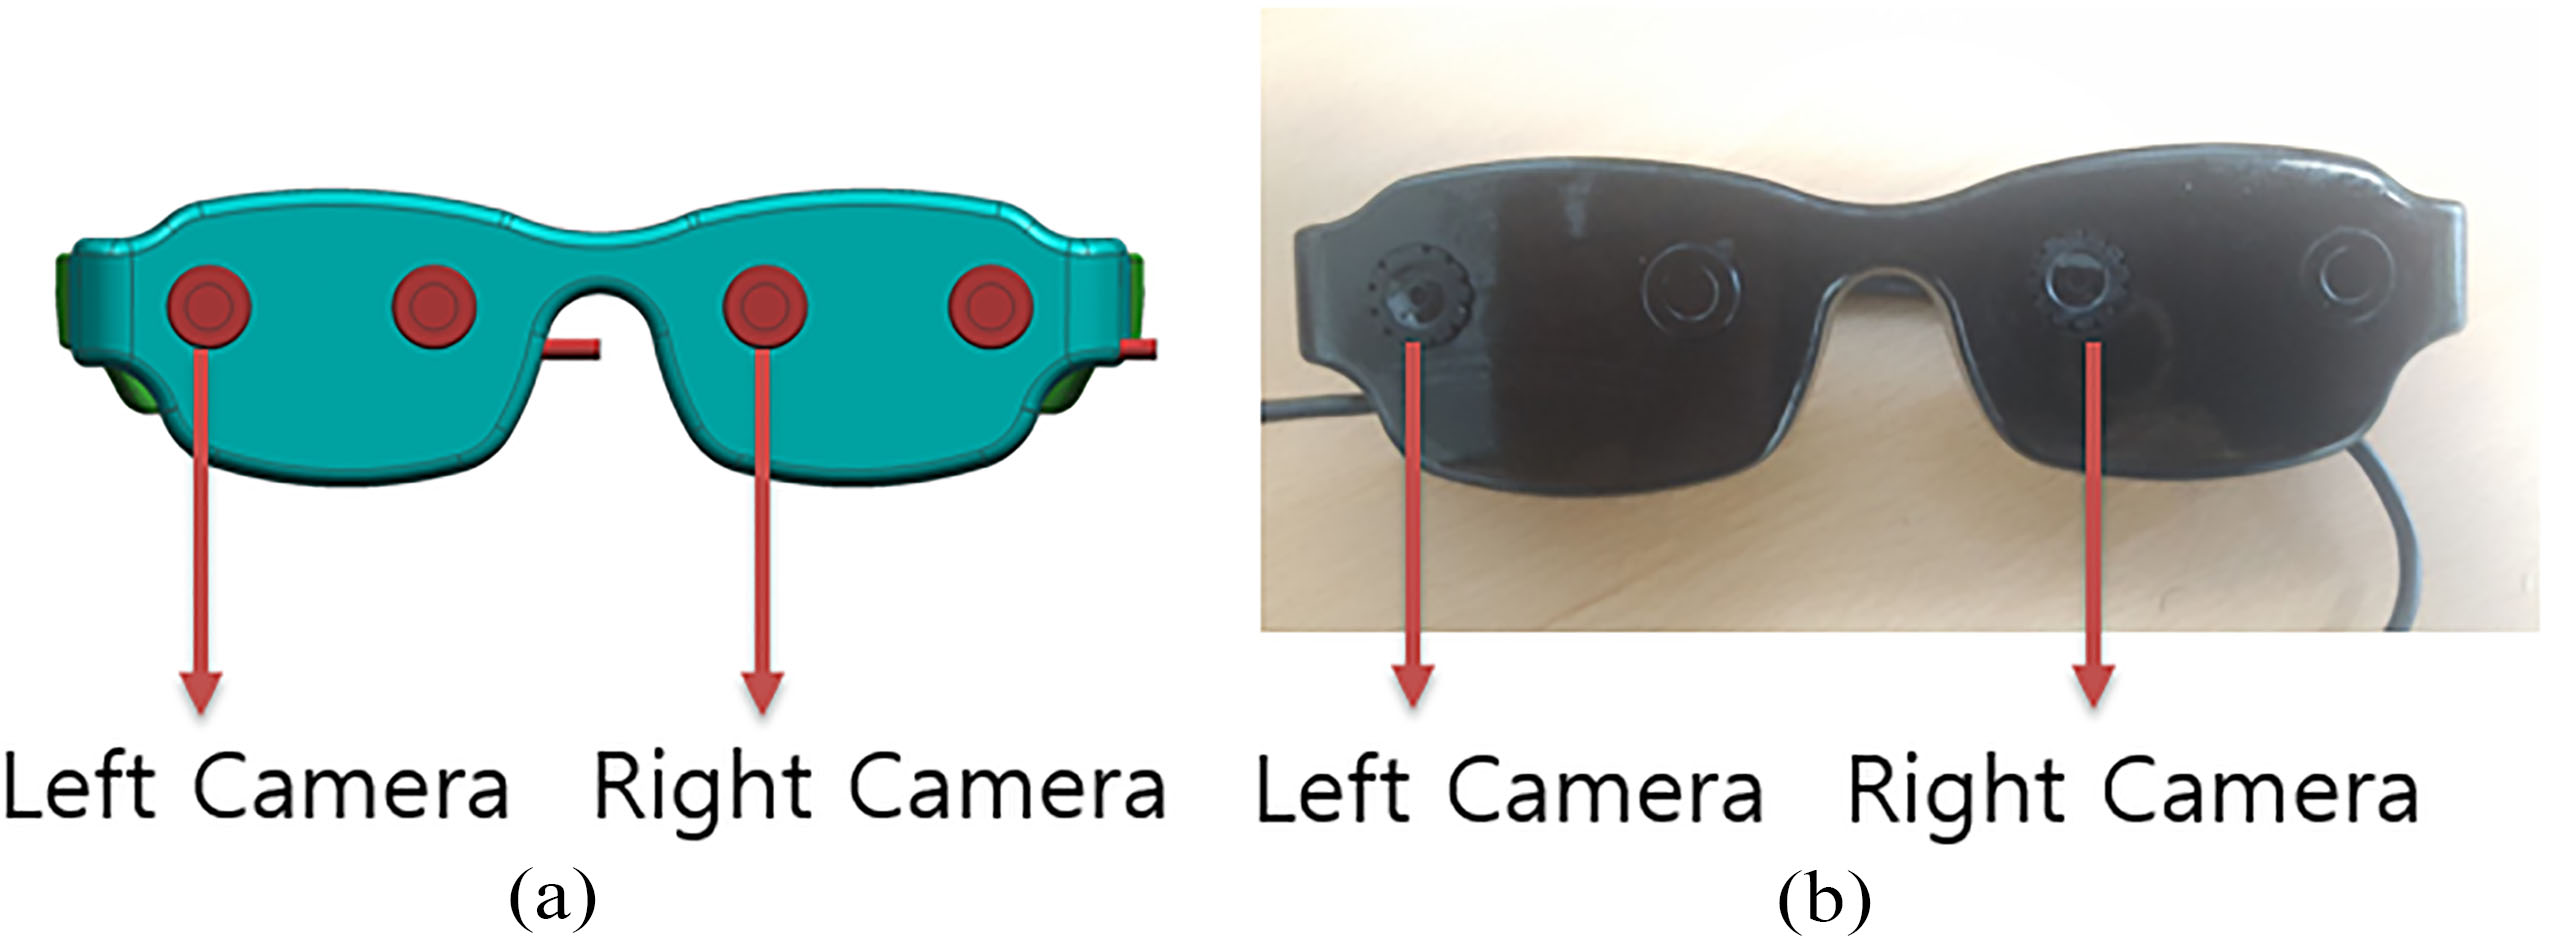 Developed eyeglass stereo camera using PC camera conformity to level the camera and minimize errors. (a) Stereo camera 3D model. (b) Developed stereo camera.